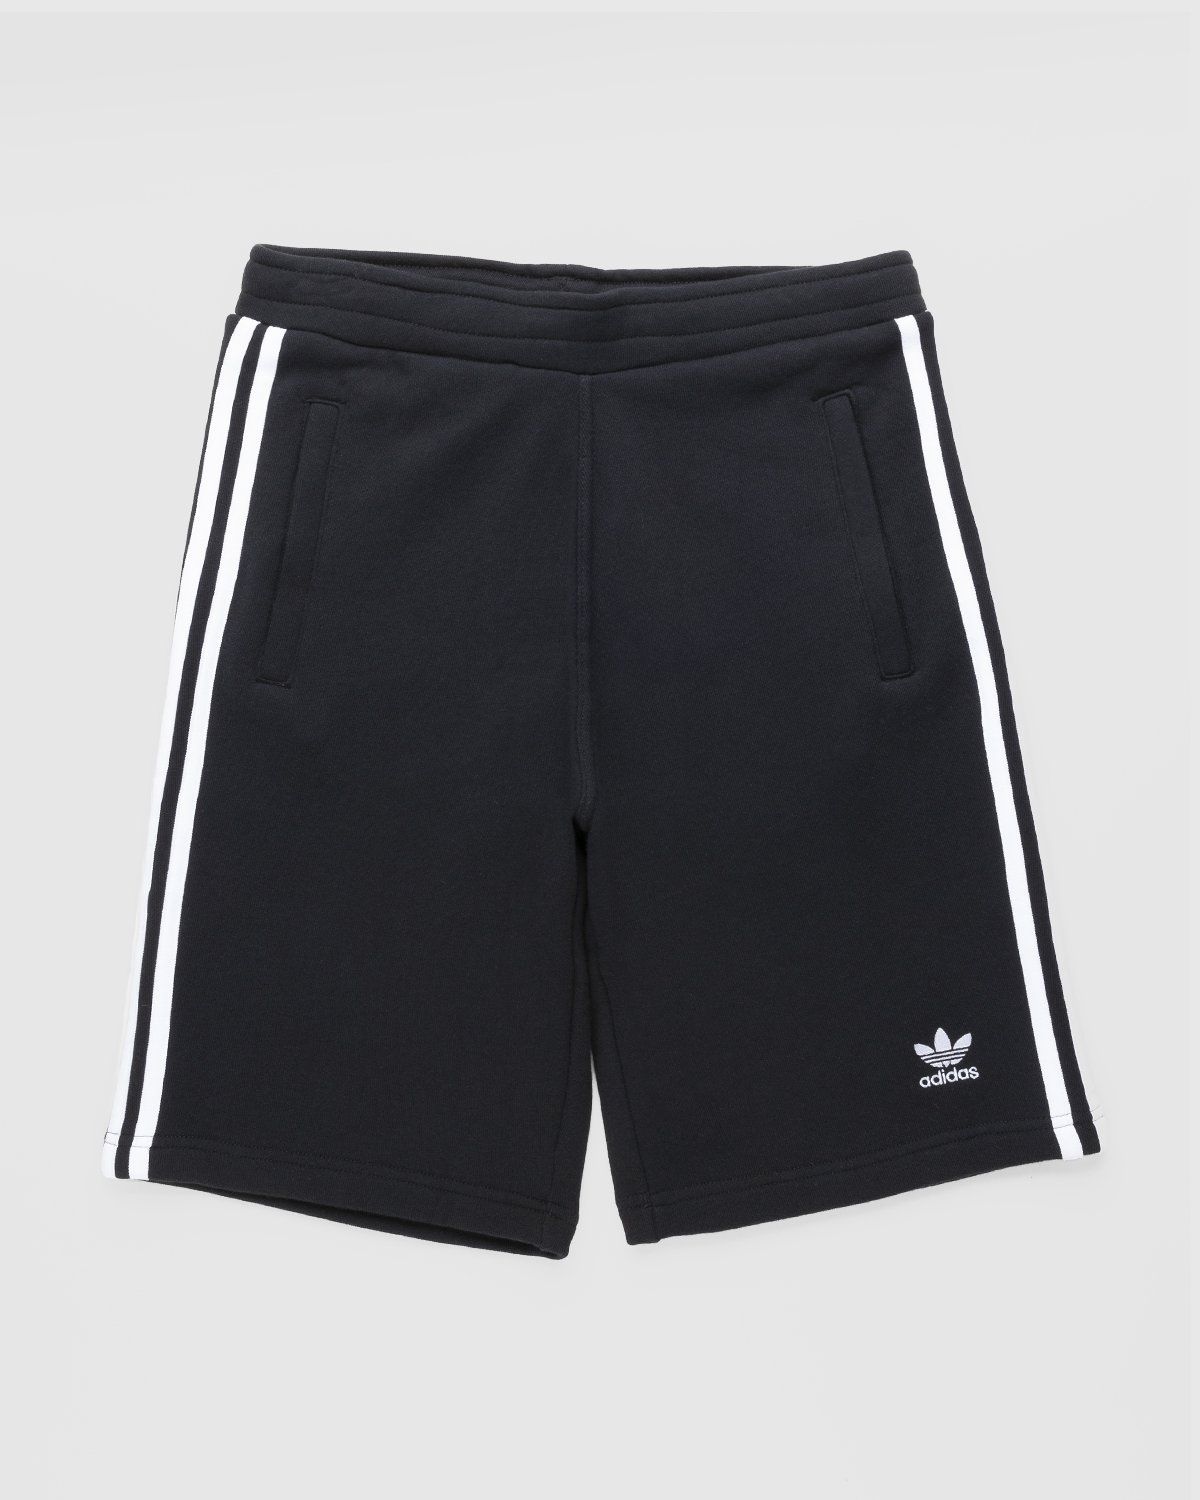 Adidas – 3 Stripe Short Black - Shorts - Black - Image 1